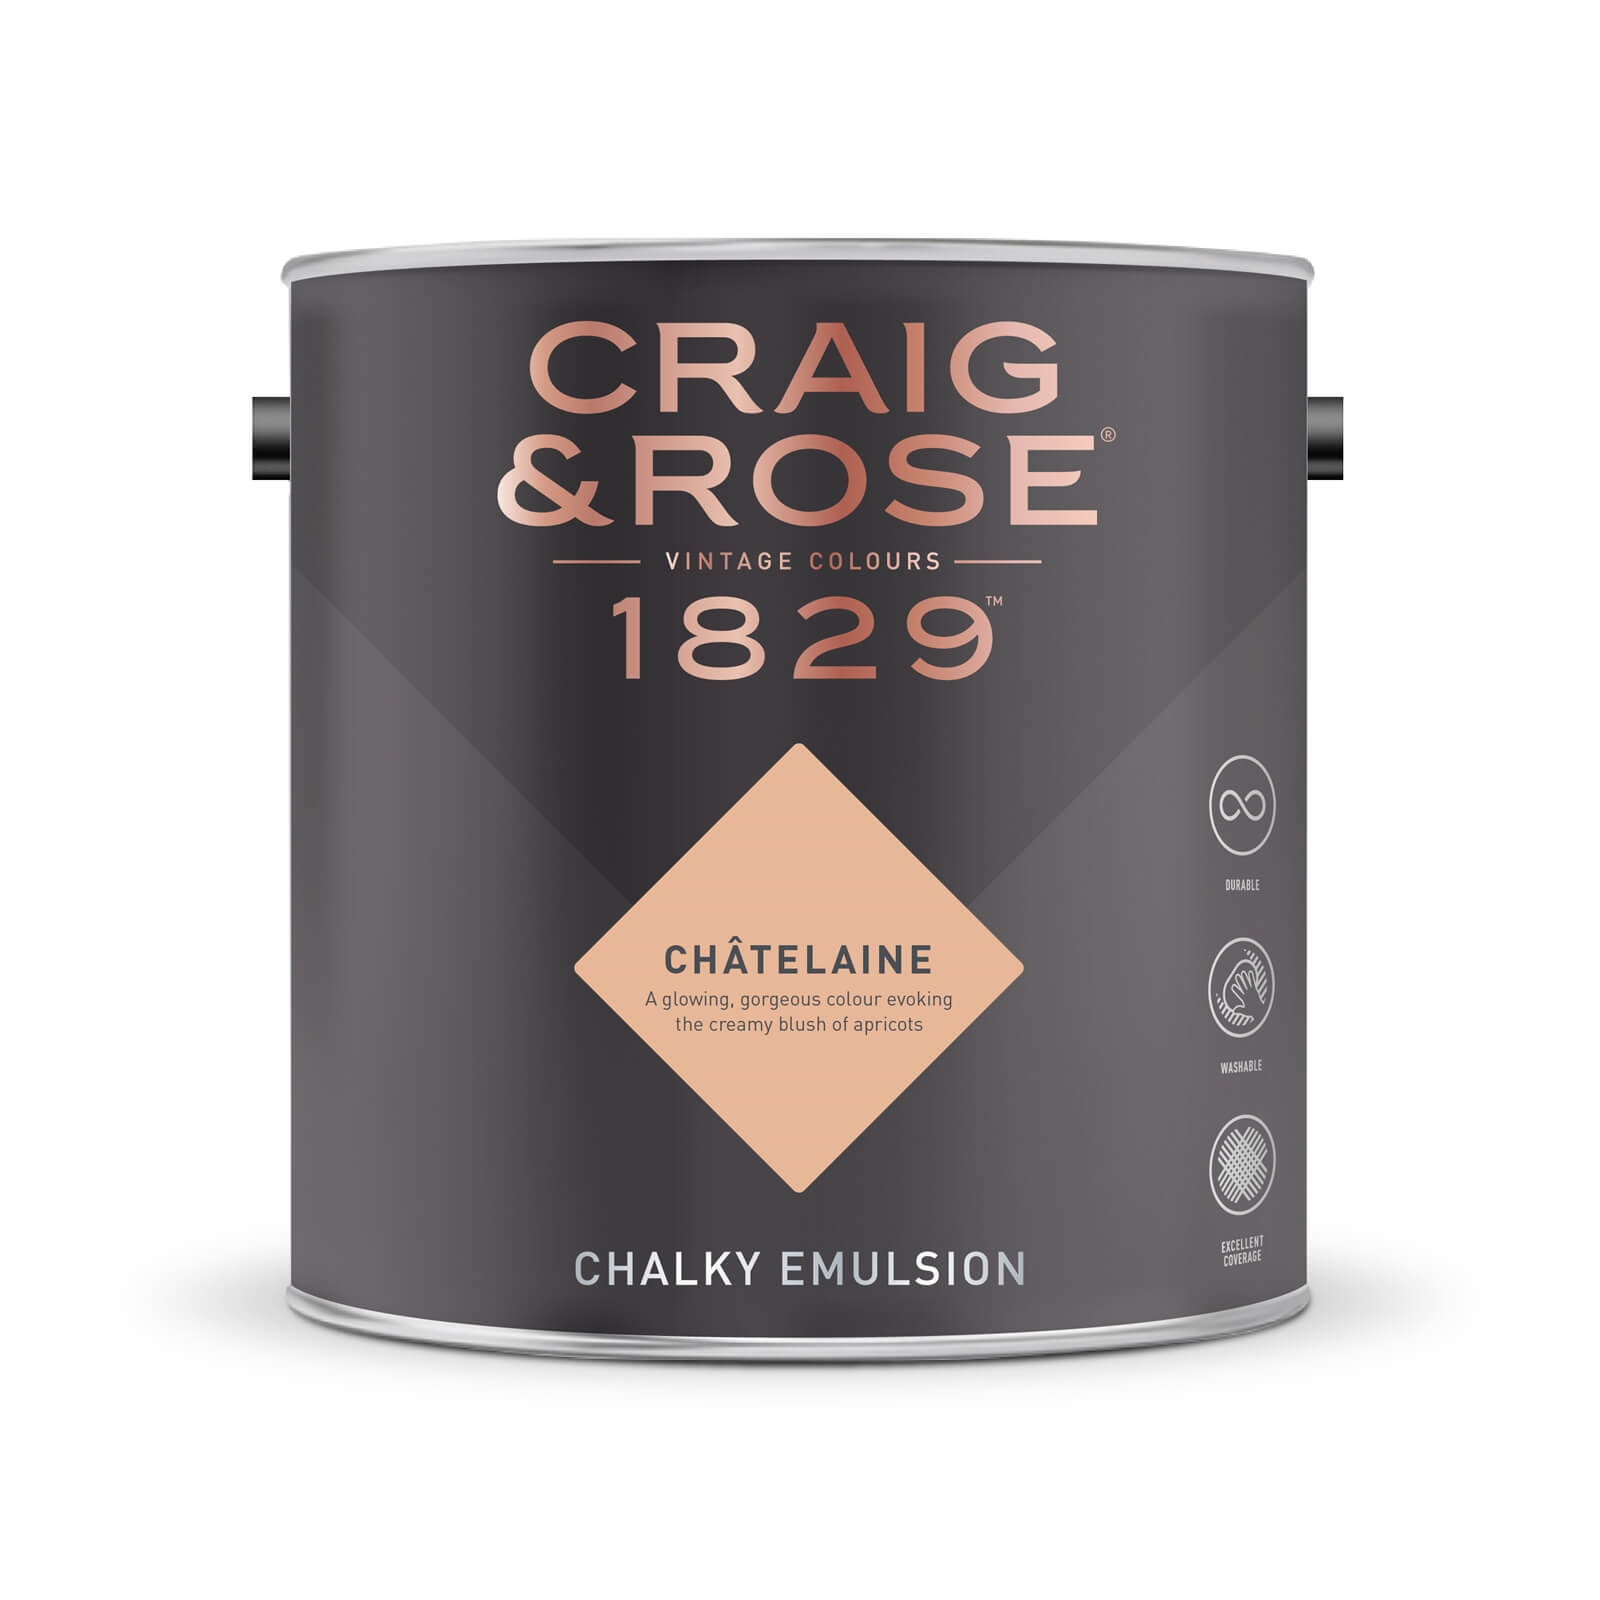 Craig & Rose 1829 Chalky Emulsion Paint Chatelaine - Tester 50ml